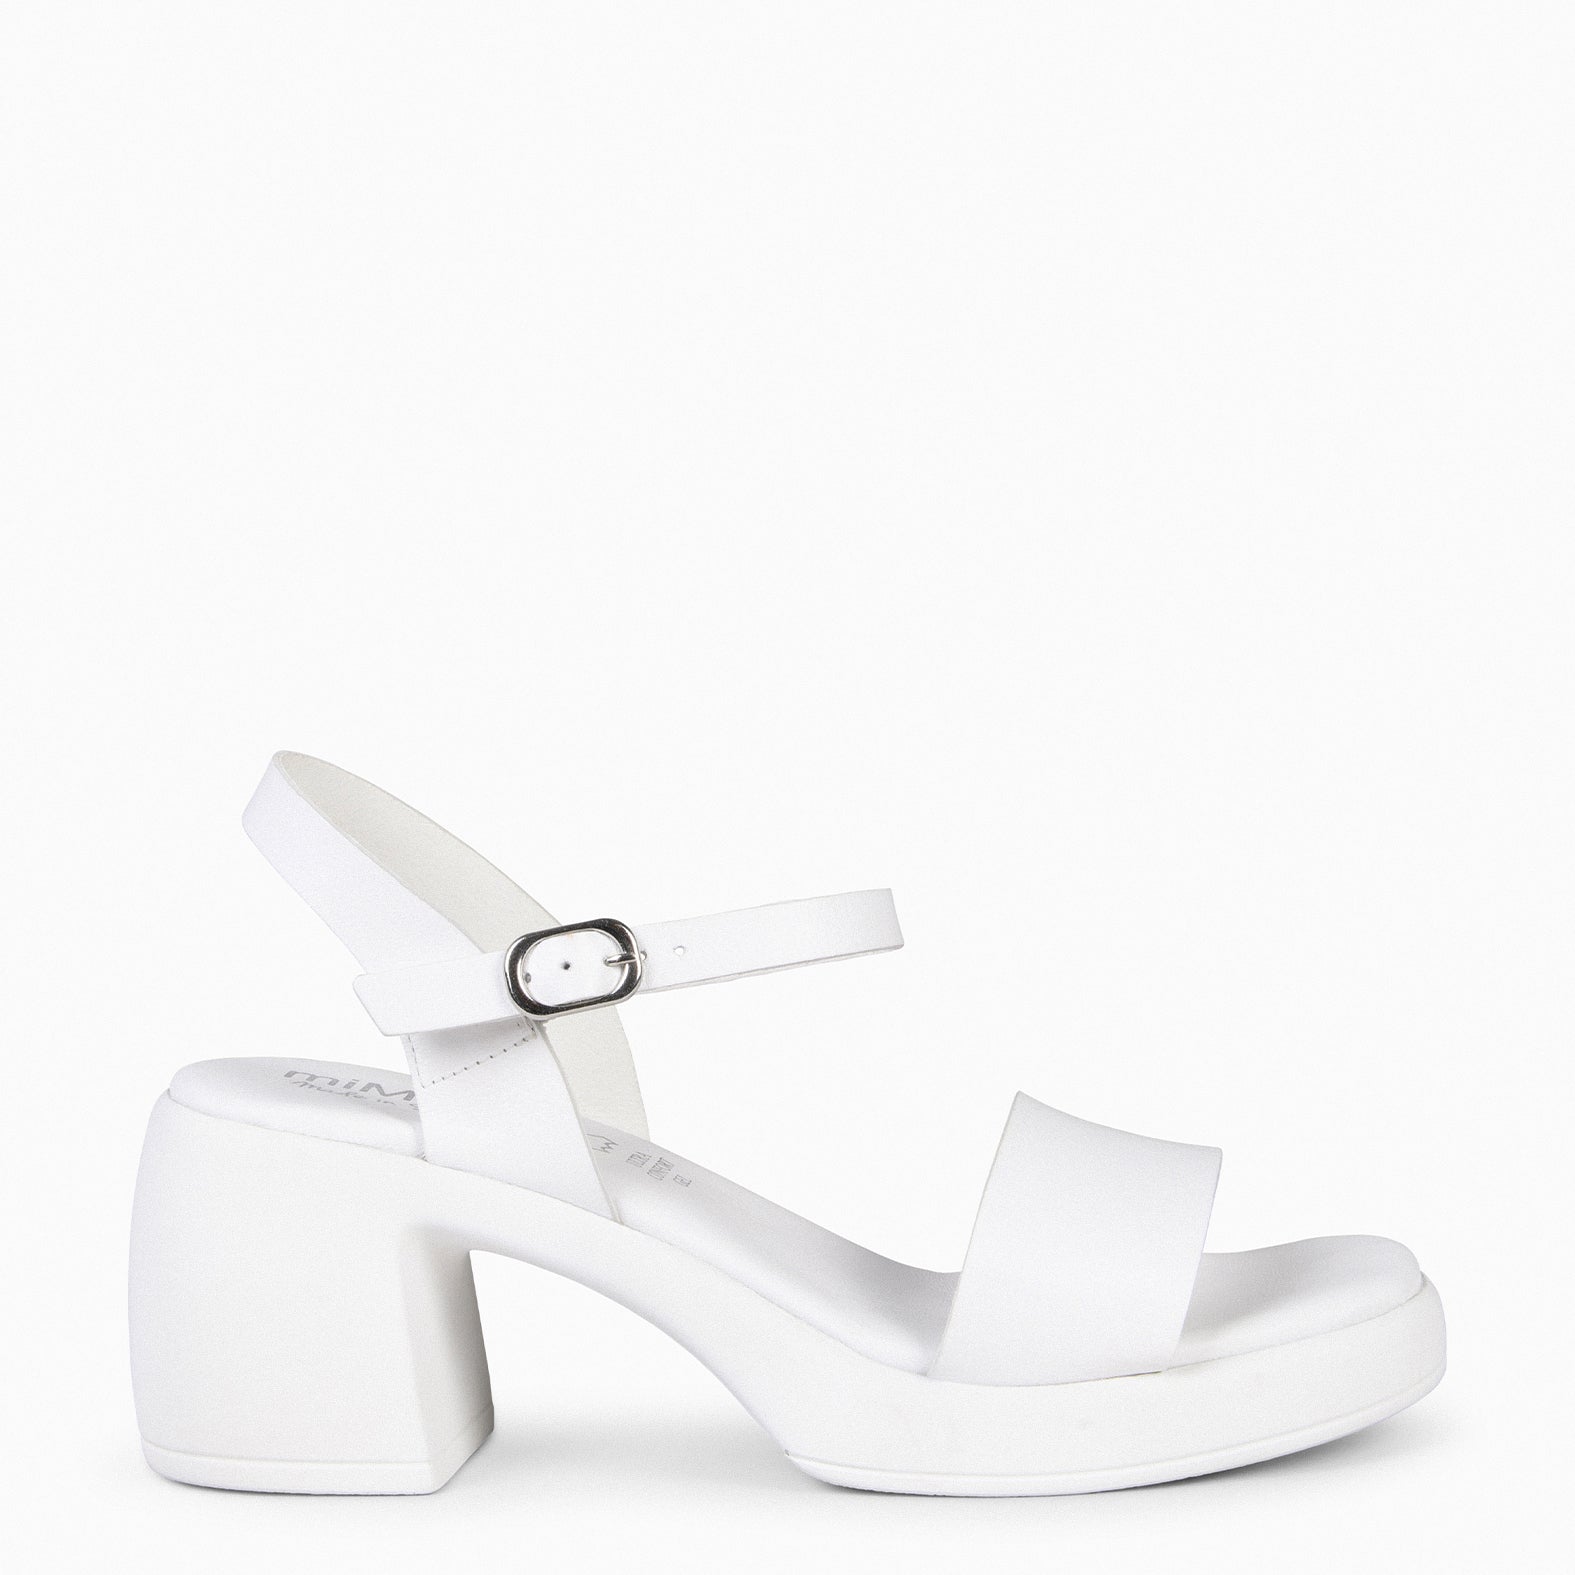 CRIS – WHITE Sandal with block platform